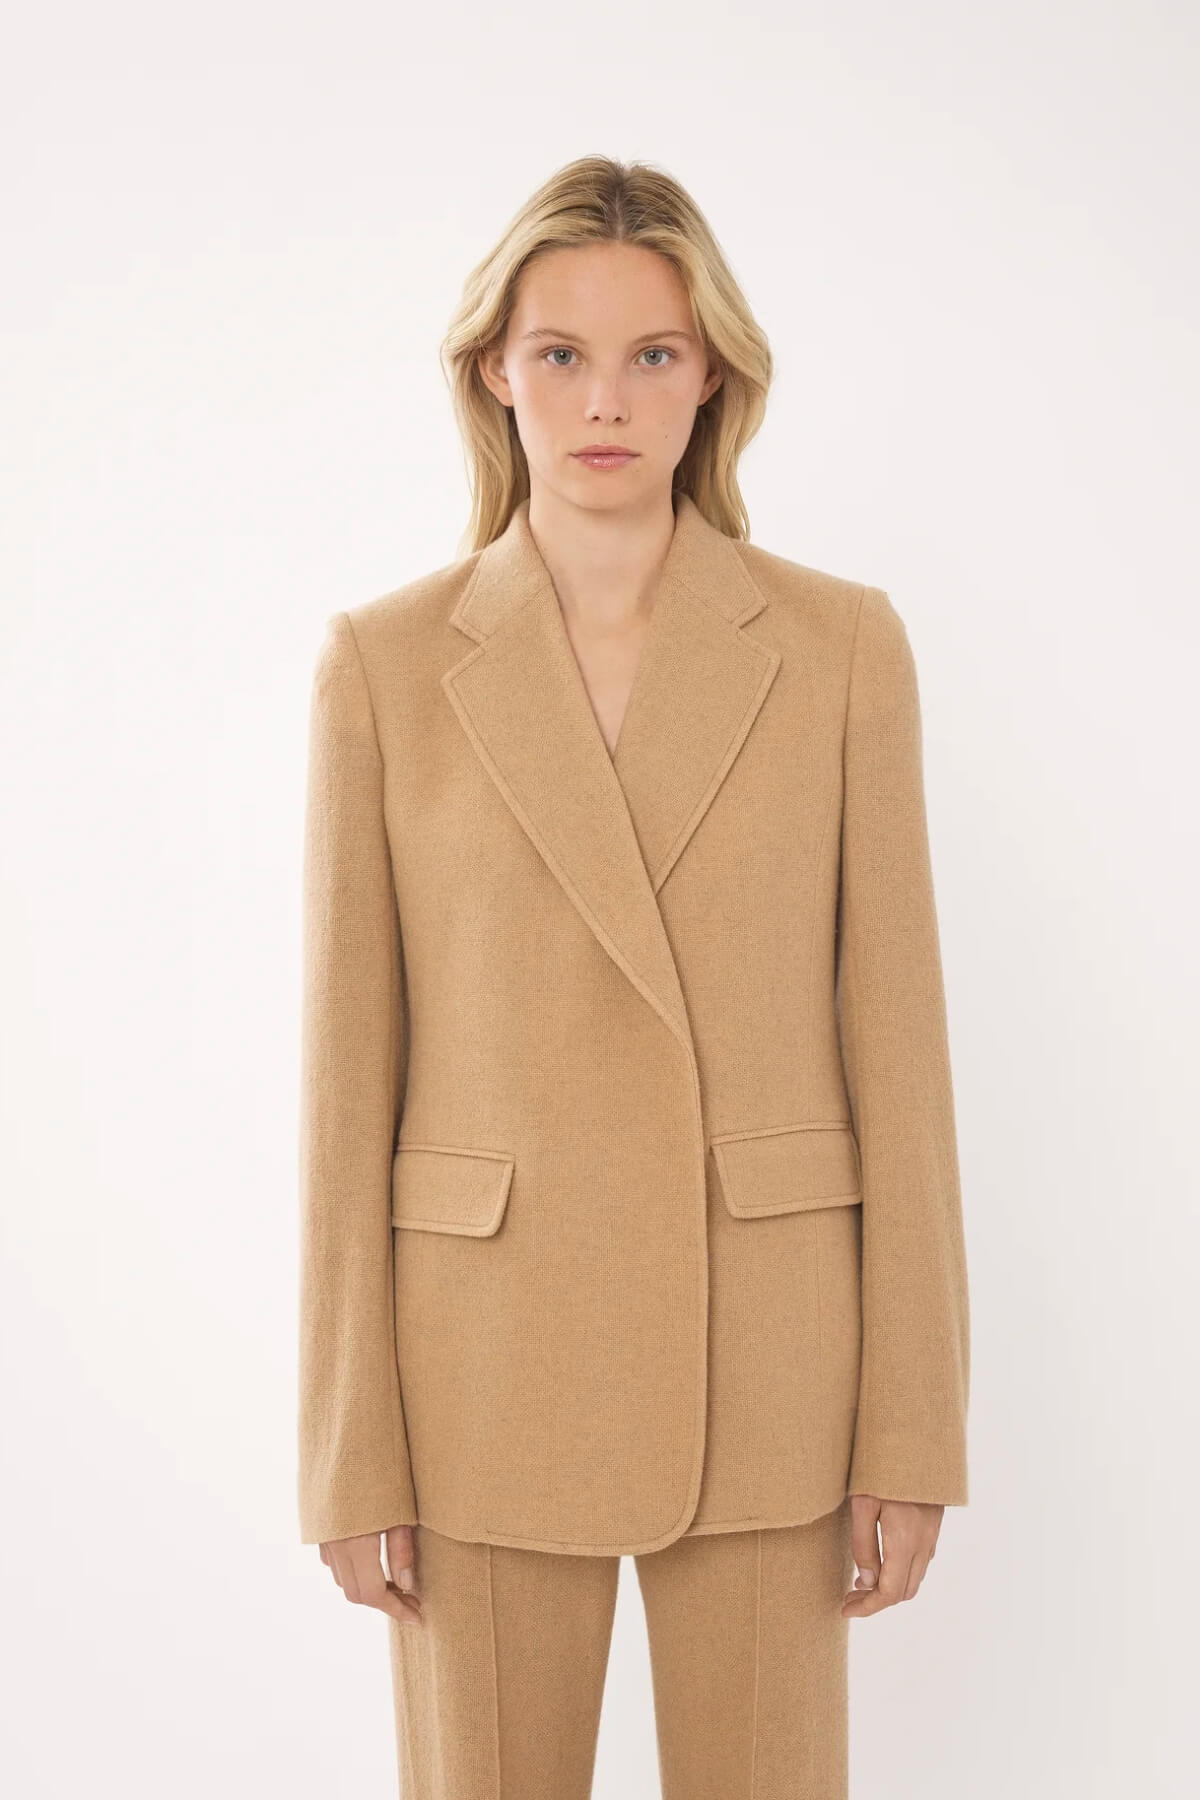 Chloé Buttonless Tailored Blazer - Worn Brown